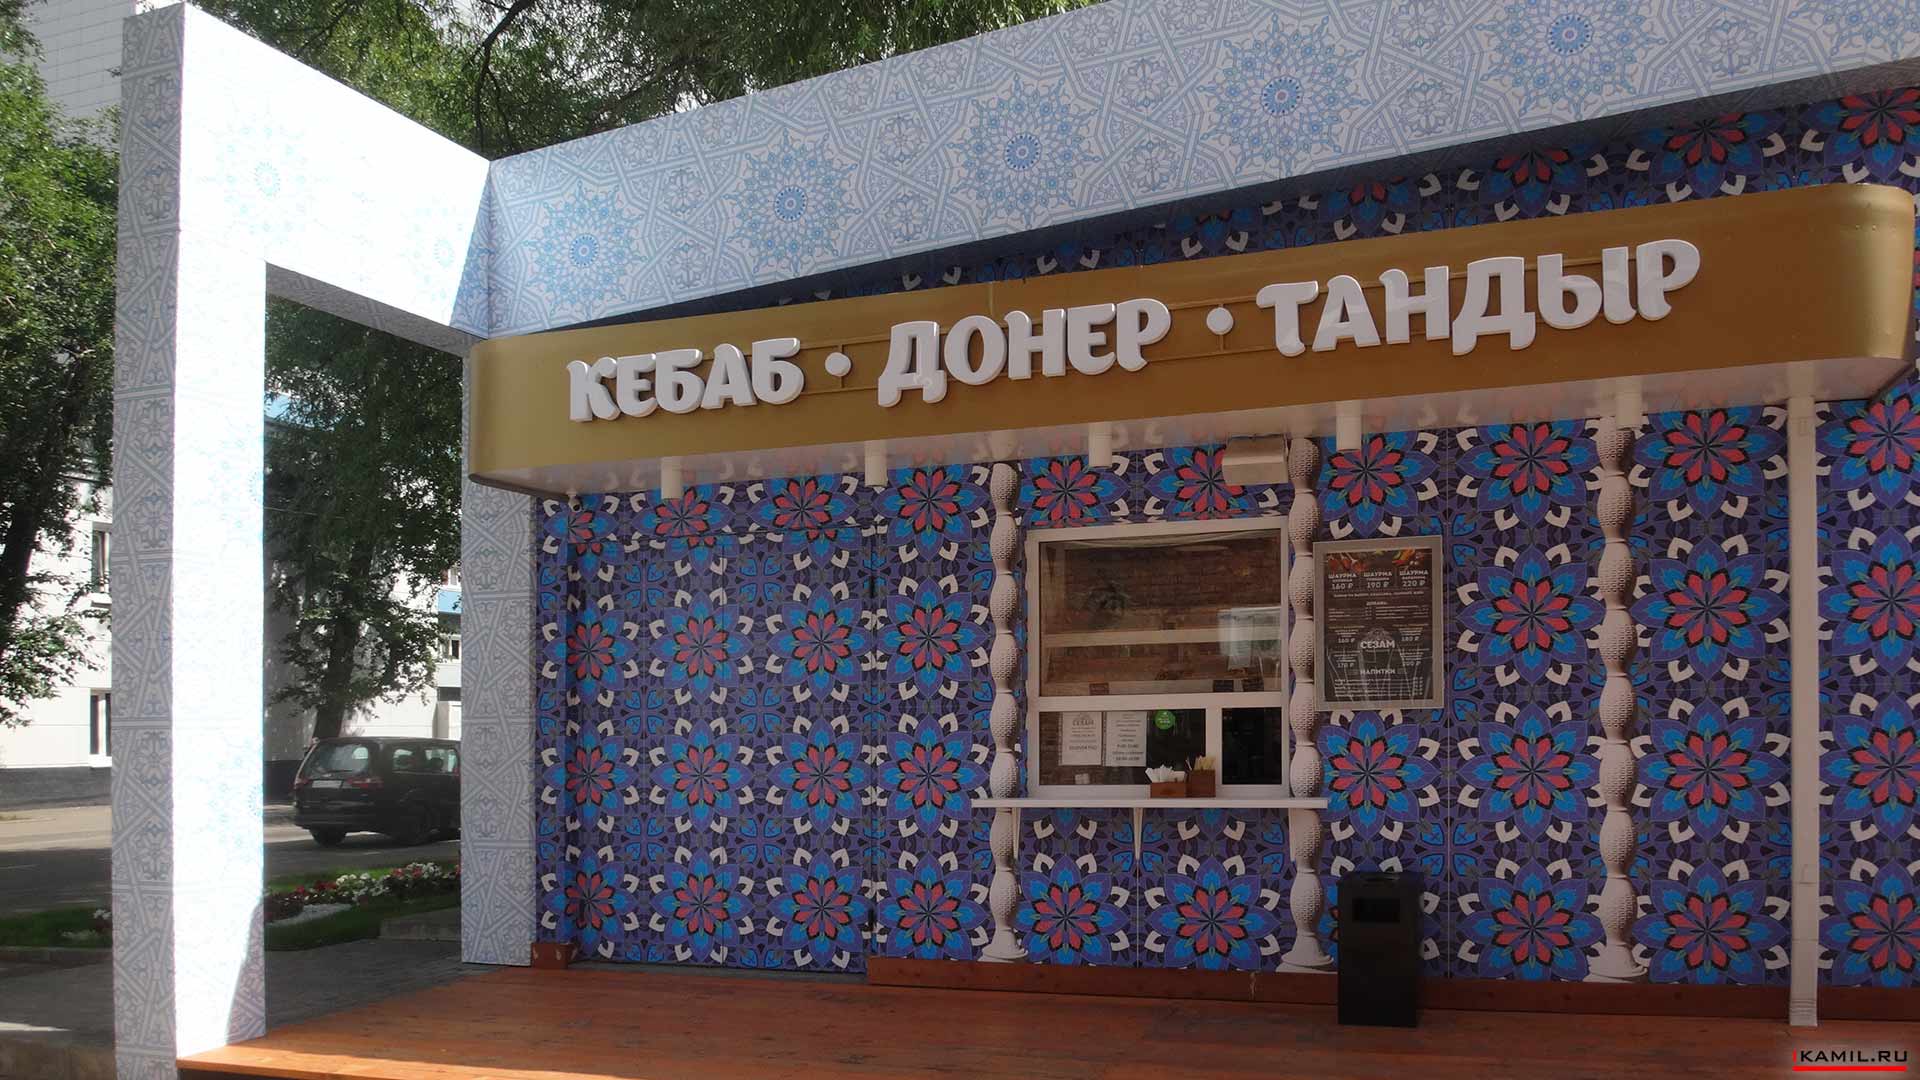 боковой фасад ресторана, кебаб, донер, тандыр, авторский орнамент